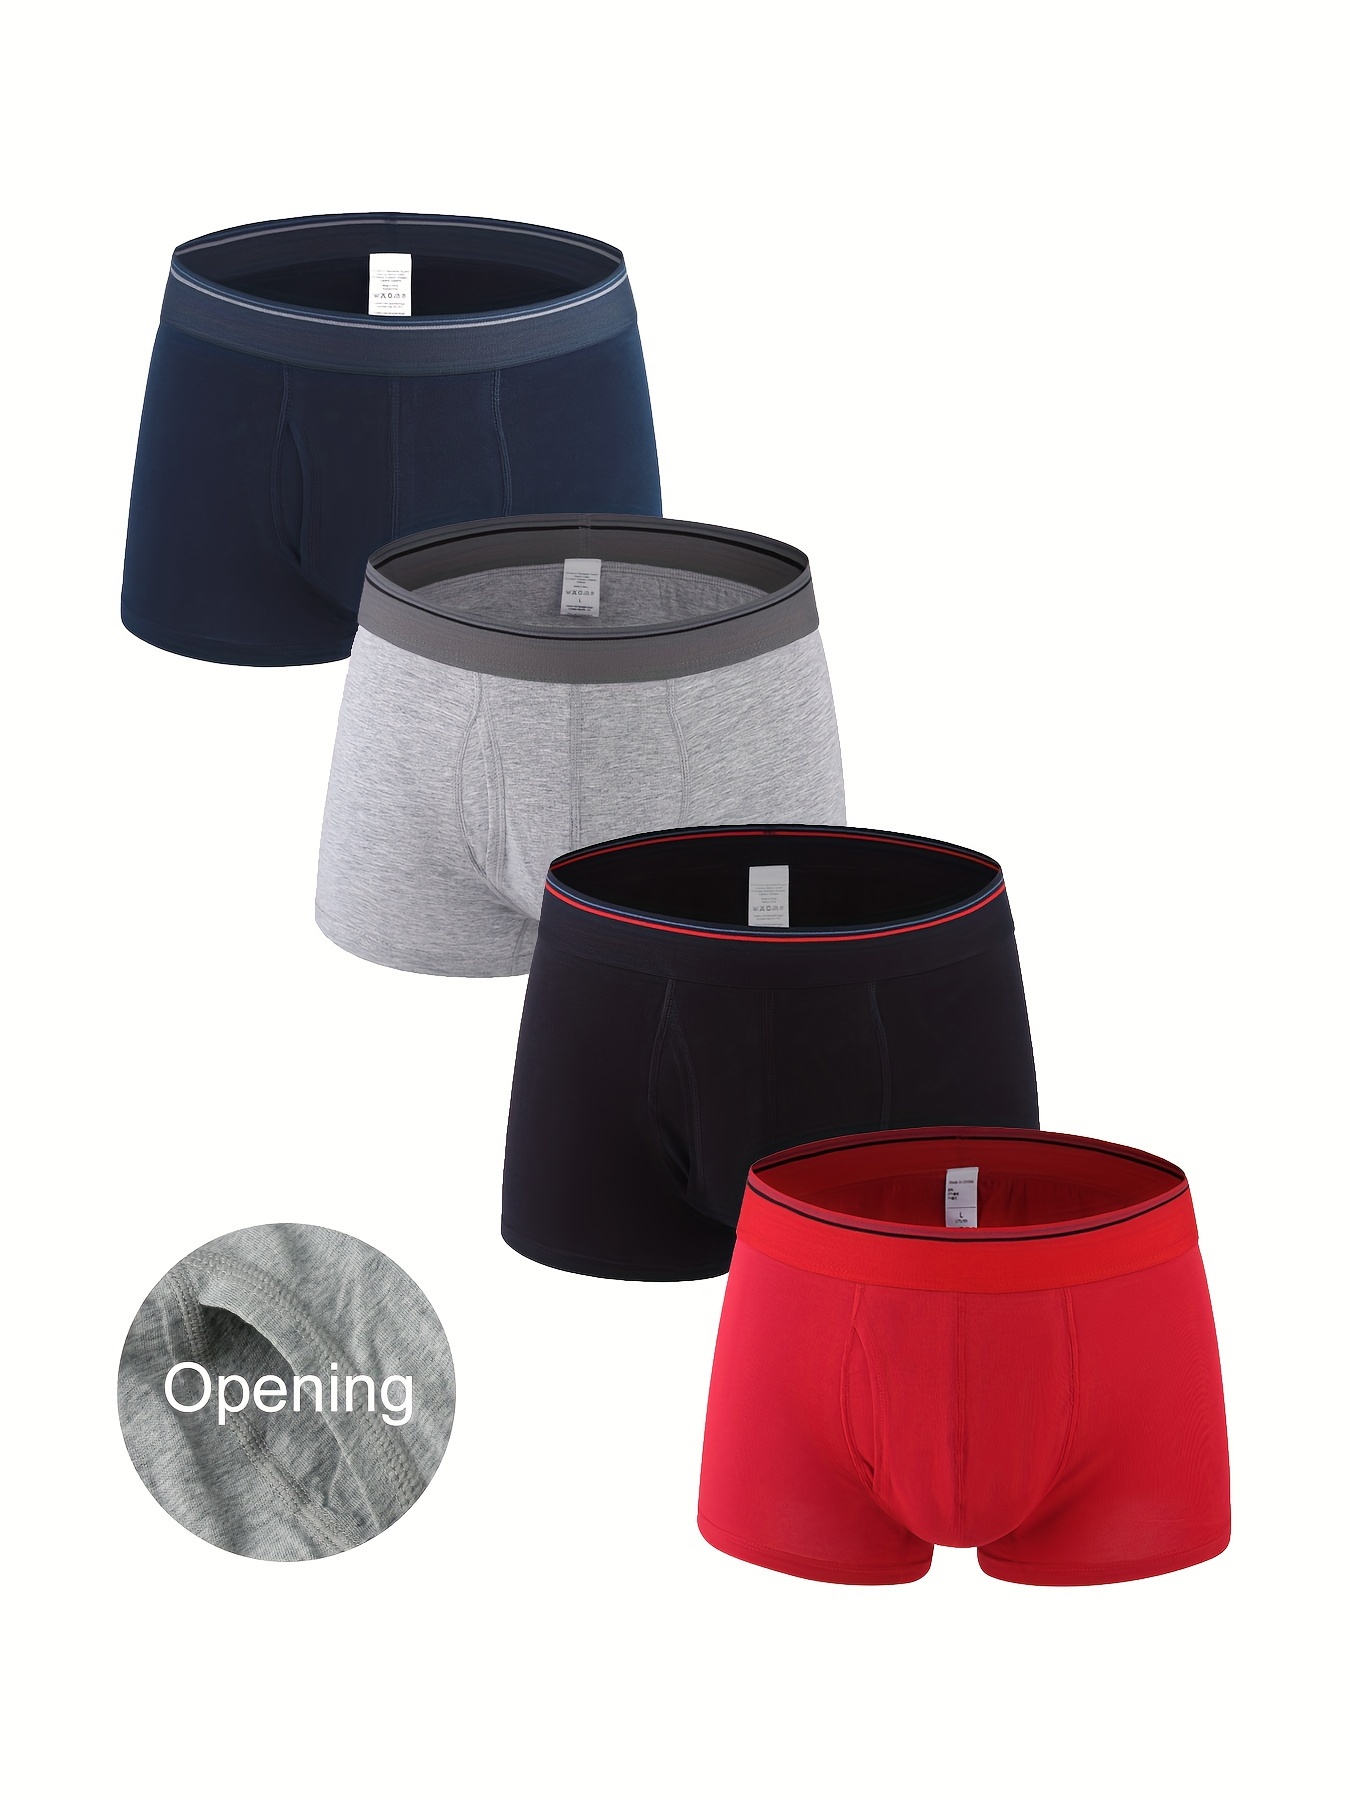 Fashion 4pcs Men's Underwear Boxer Briefs Fashion Casual Classic Style  Underpants